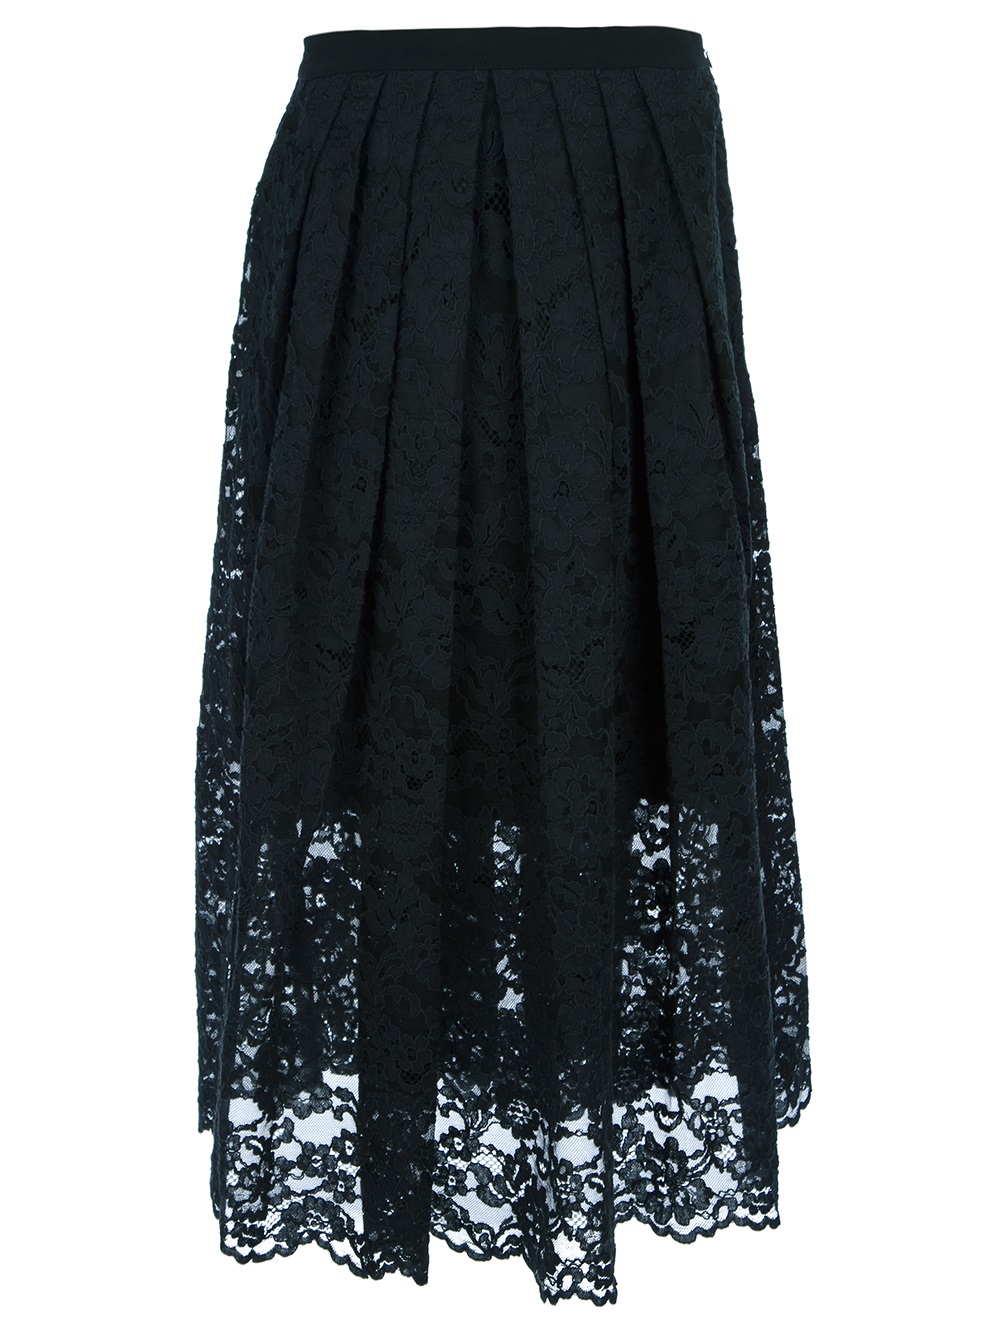 Lyst - Tibi Lace Overlay Midi Skirt in Black